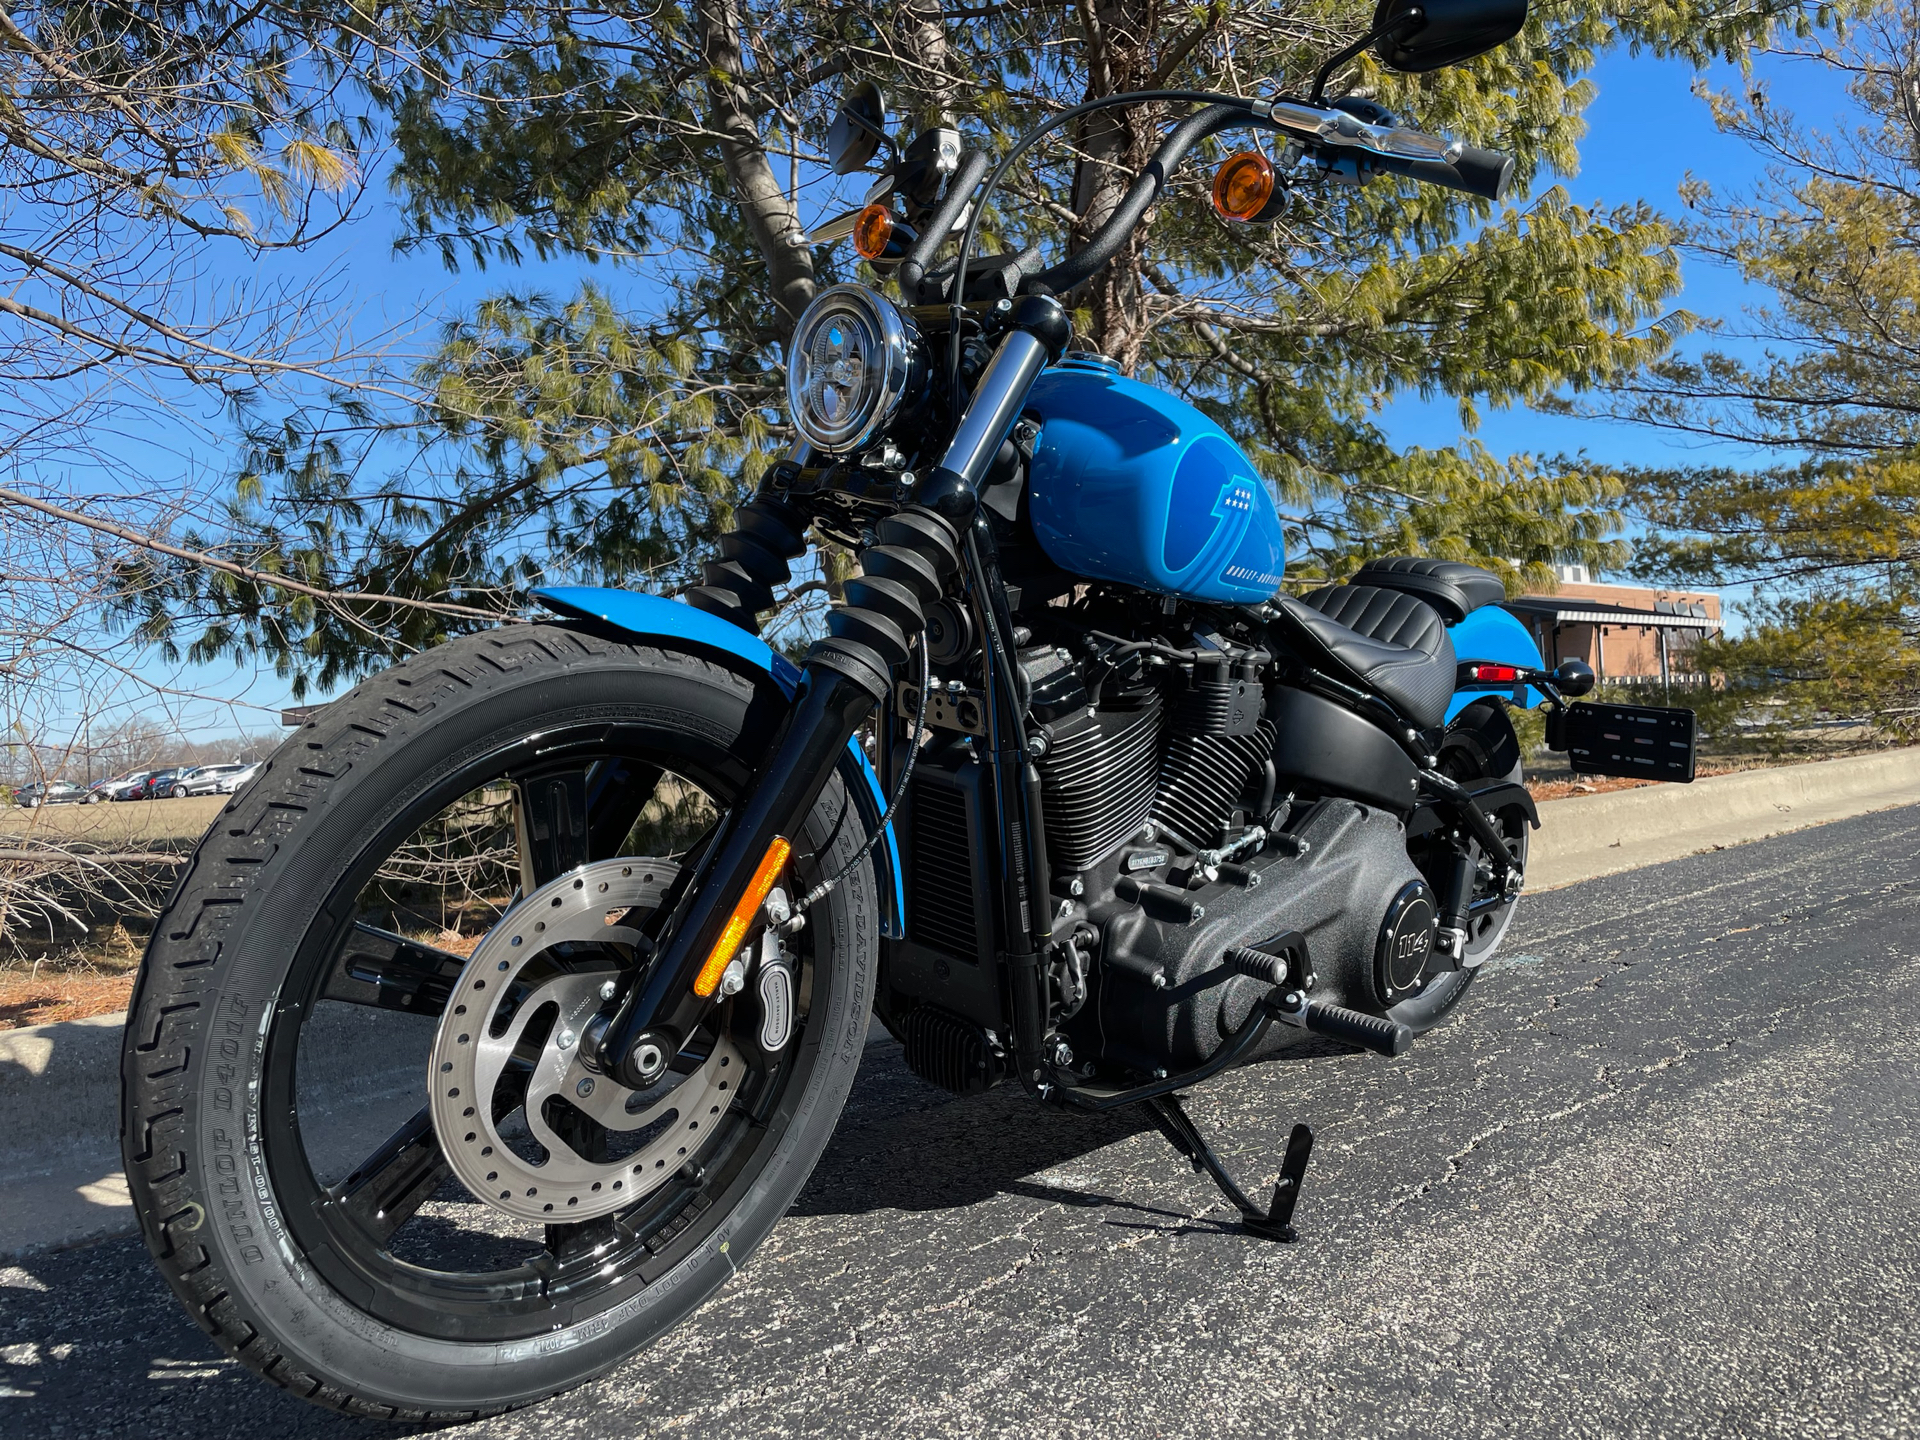 2022 Harley-Davidson Street Bob® 114 in Forsyth, Illinois - Photo 5